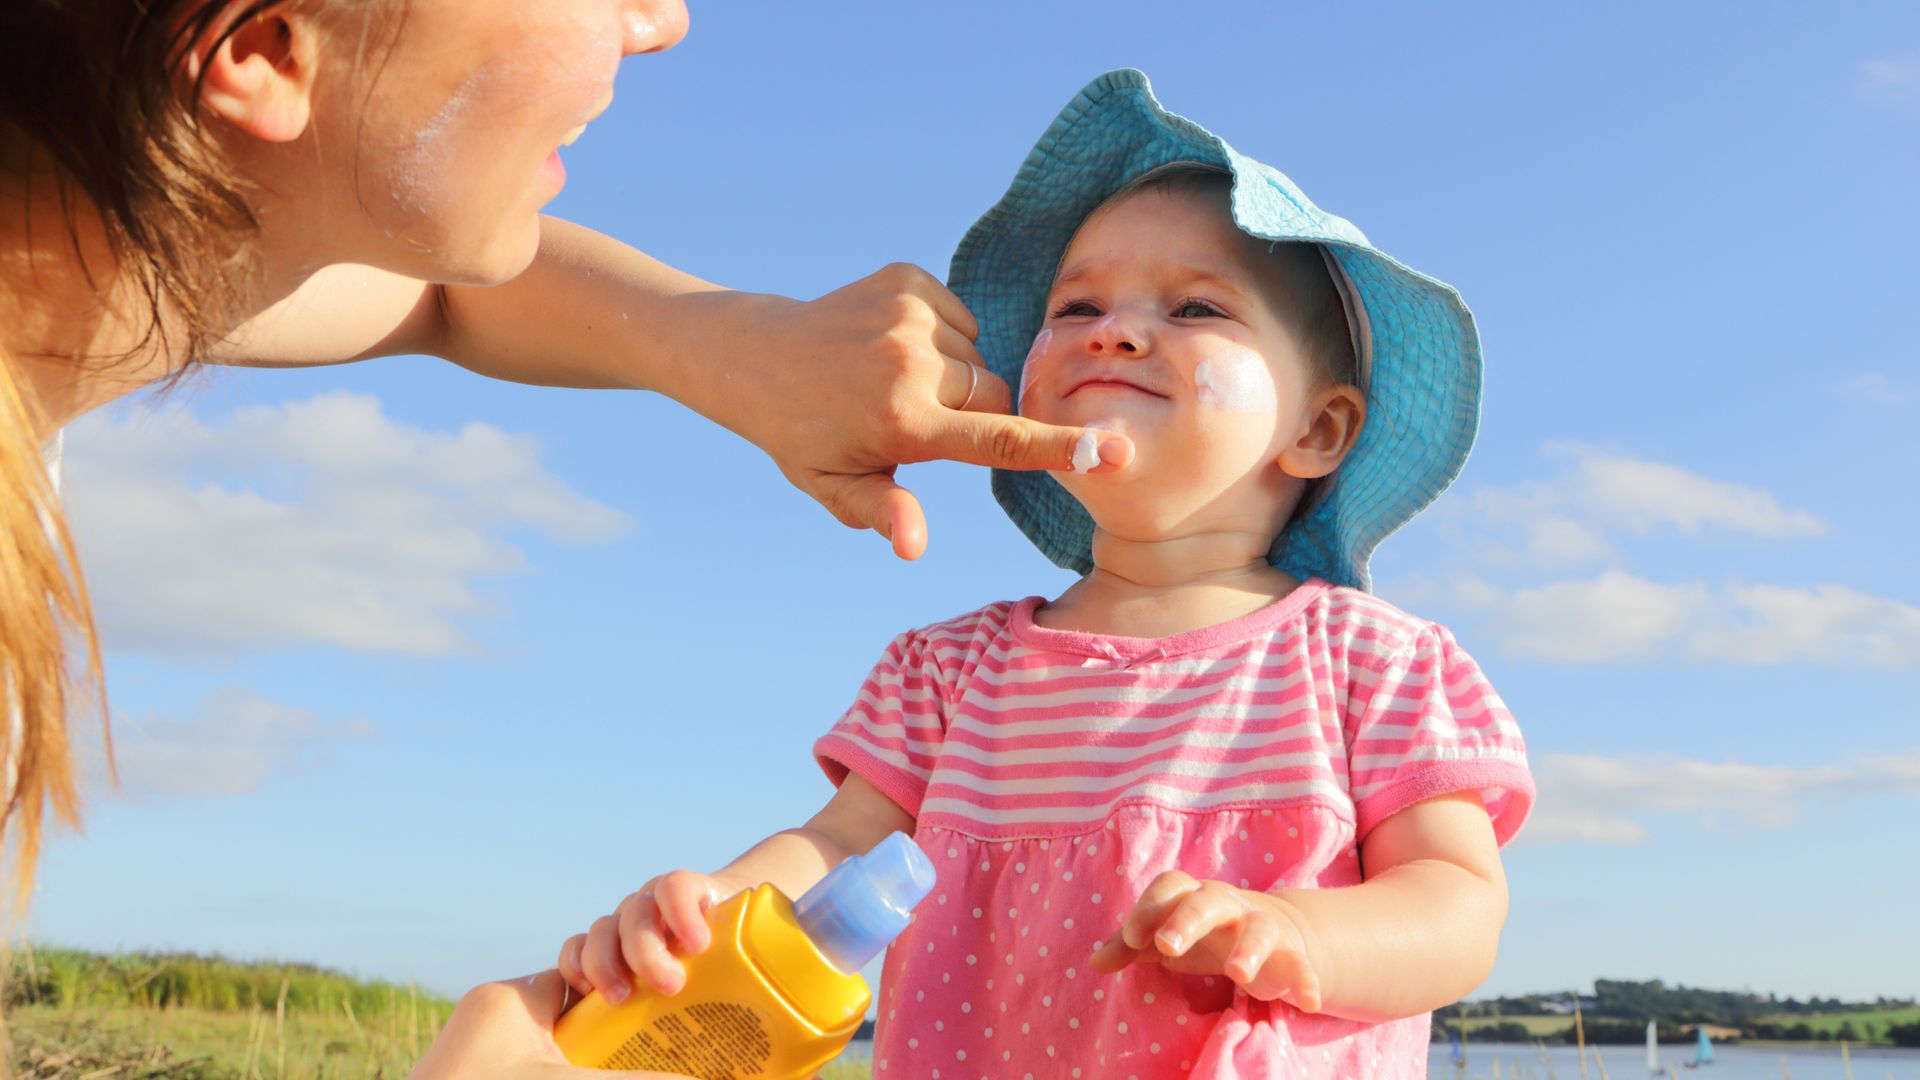 Mother putting sun cream on toddler girl